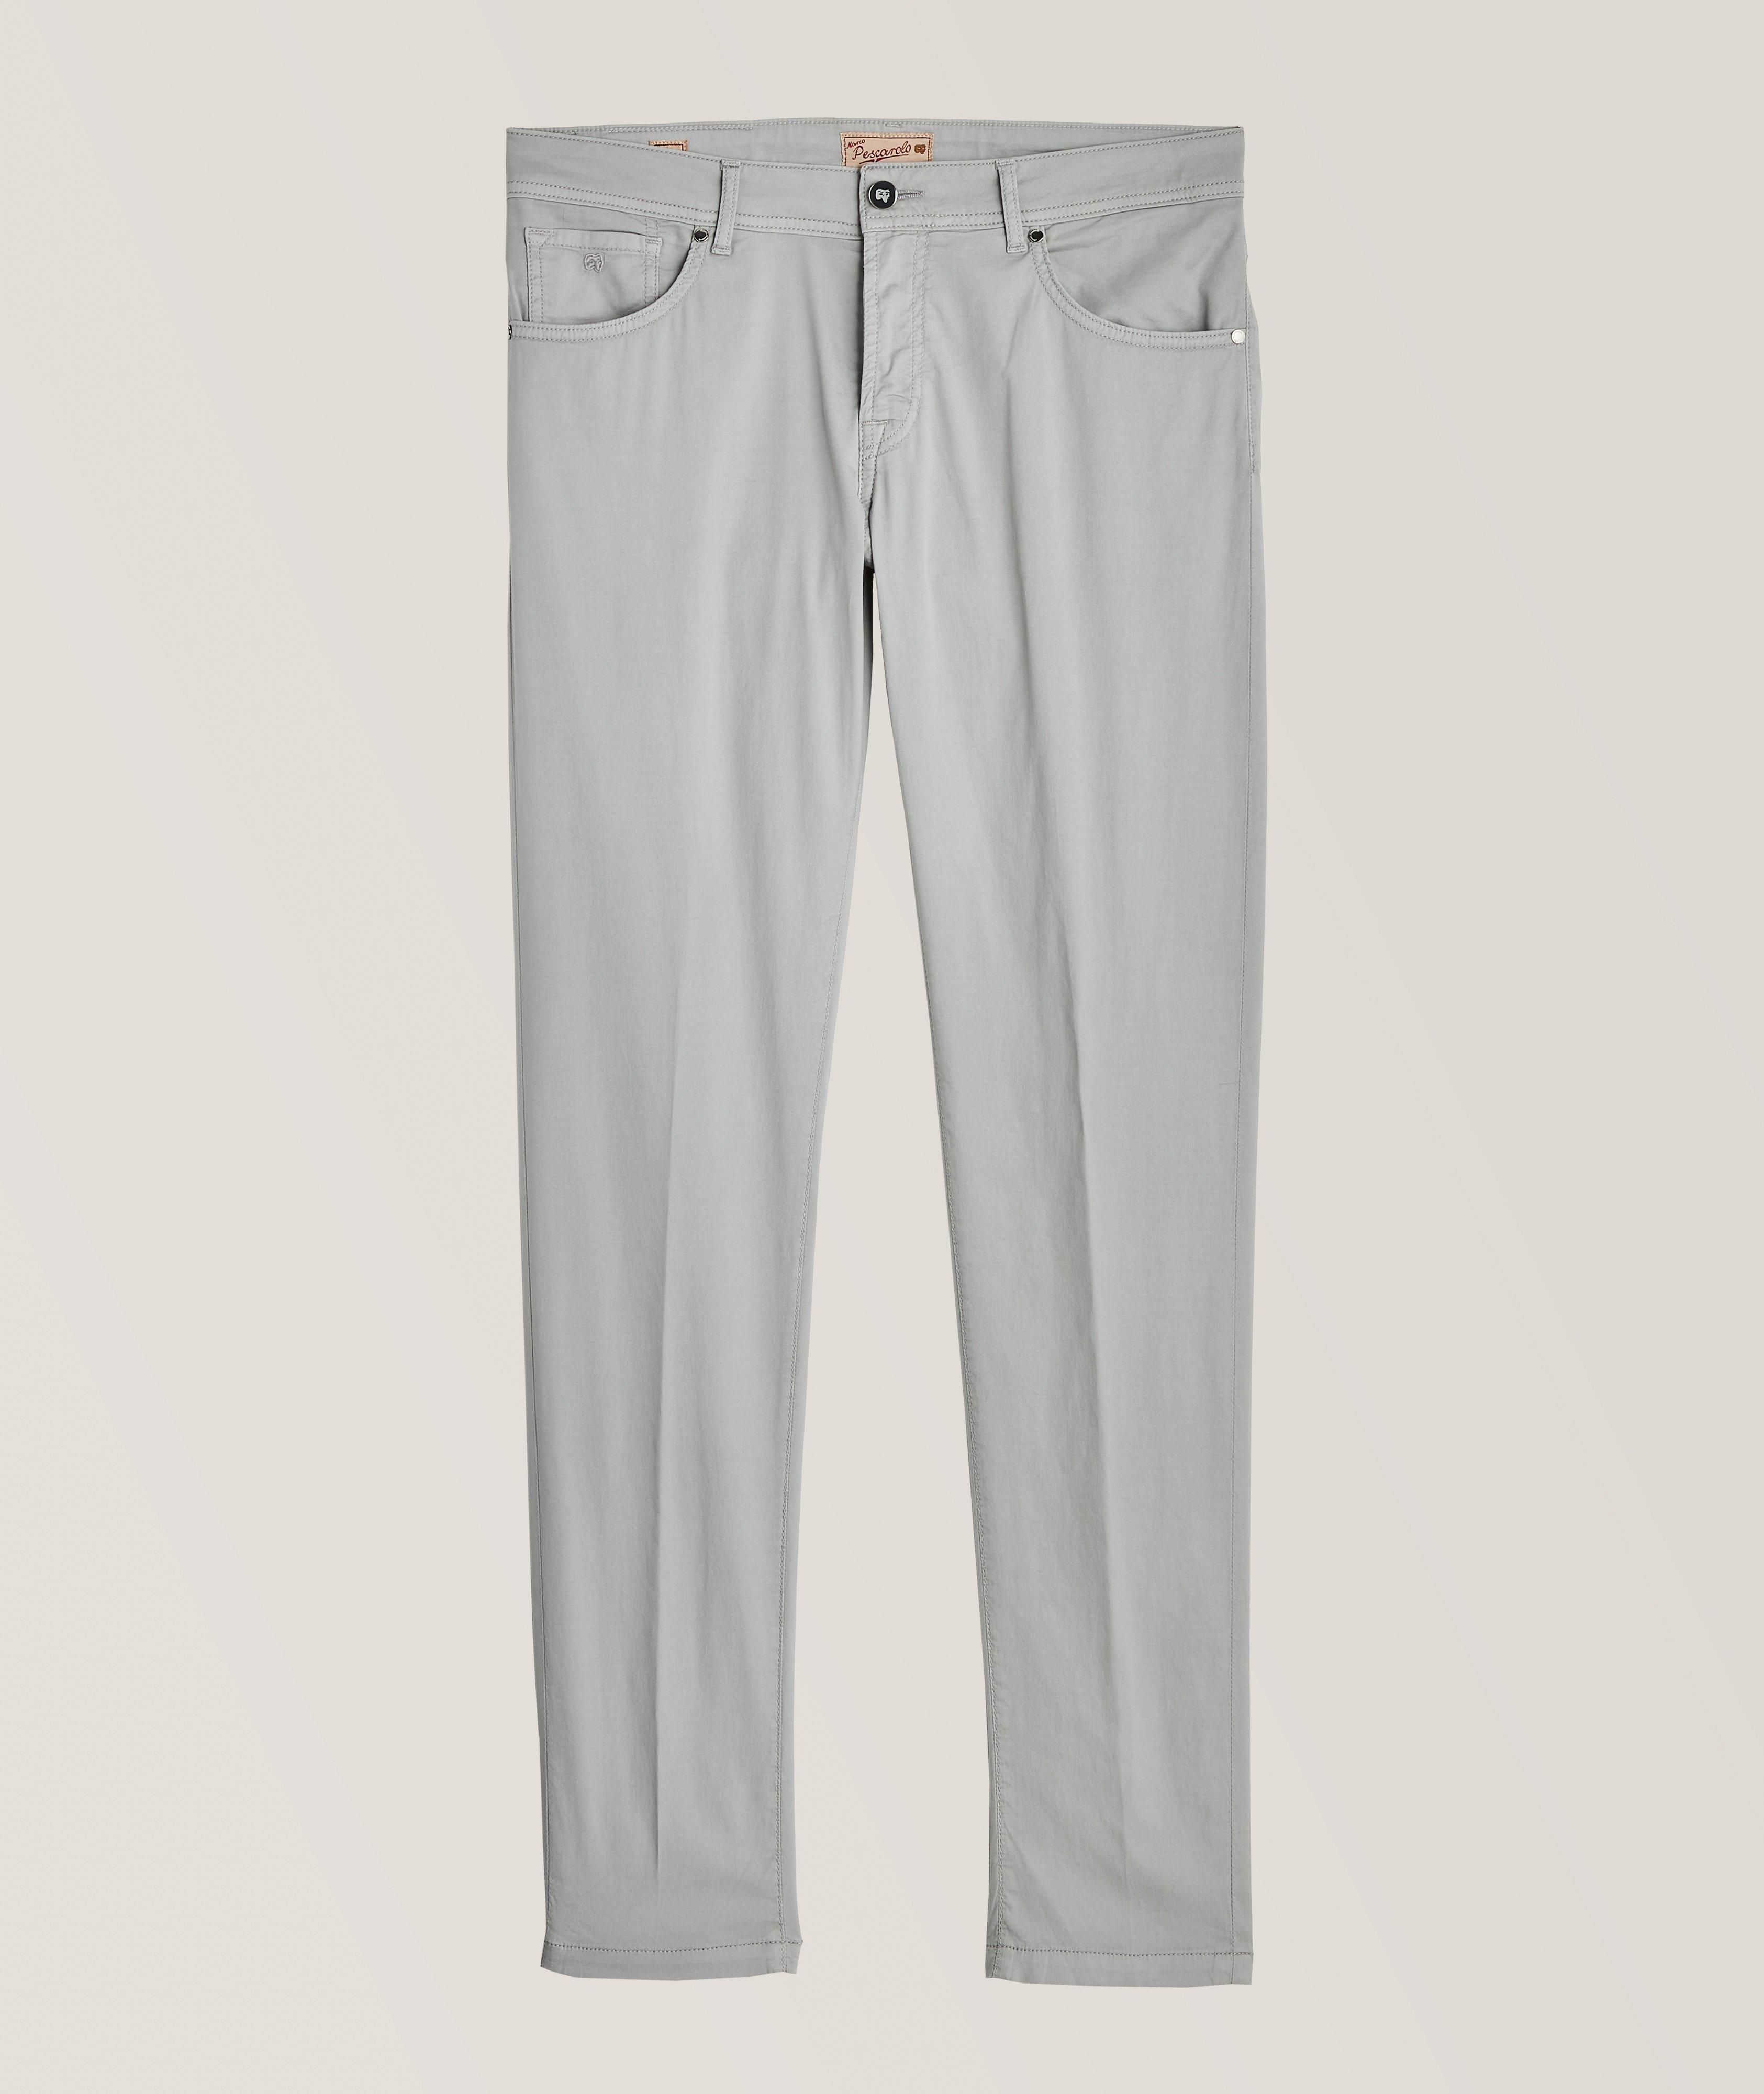 5-Pocket Style Cotton-Blend Pants image 0